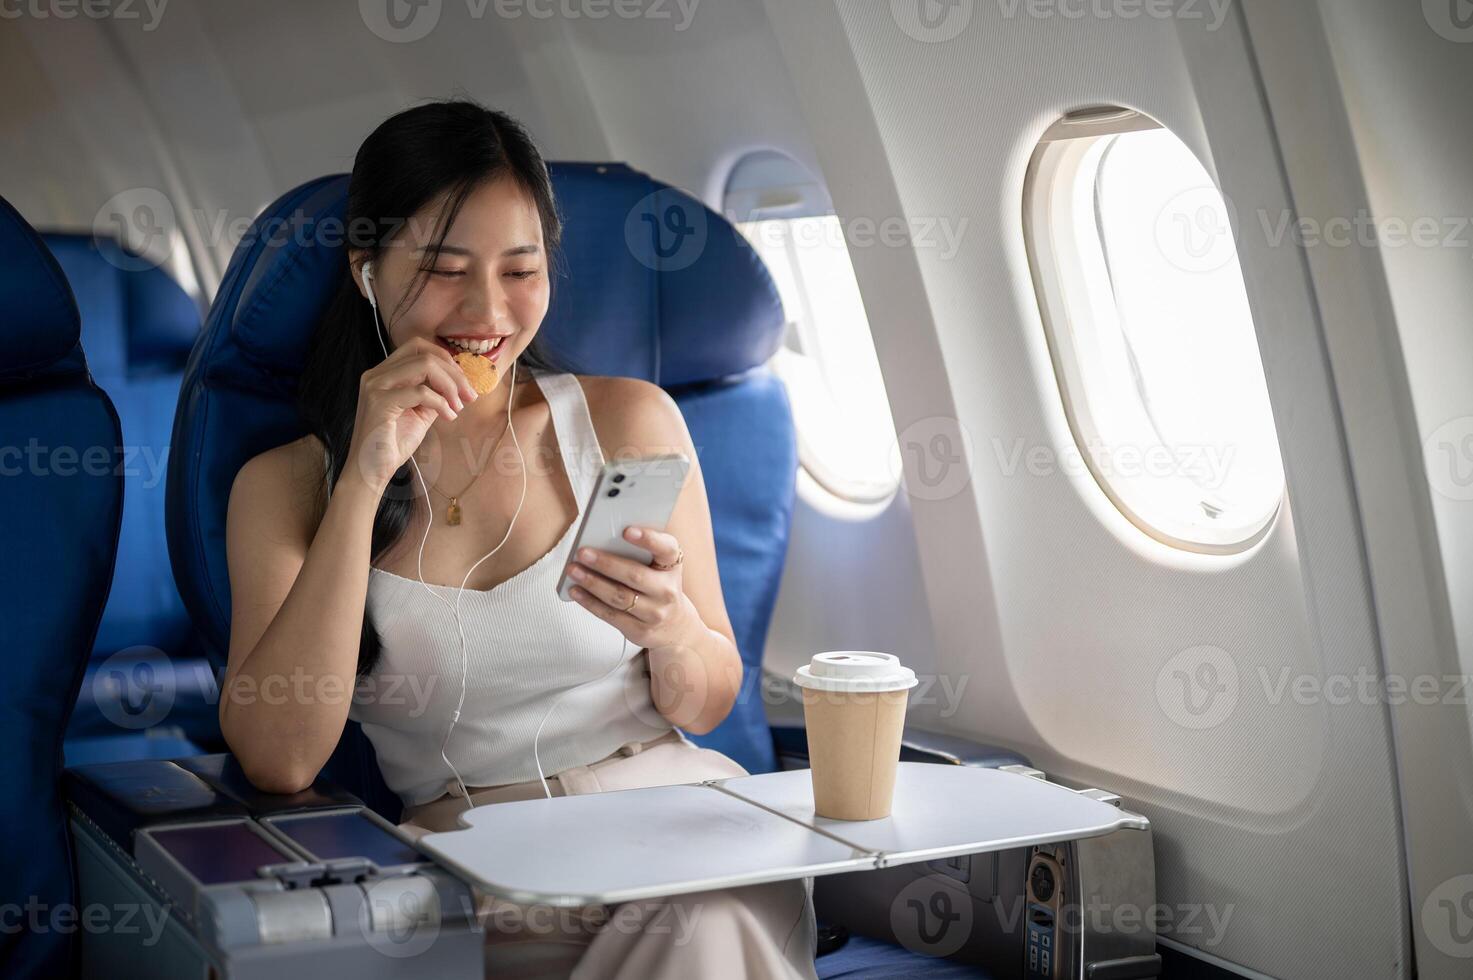 A female passenger is enjoying snacks, listening to music on her headphones during the flight. photo